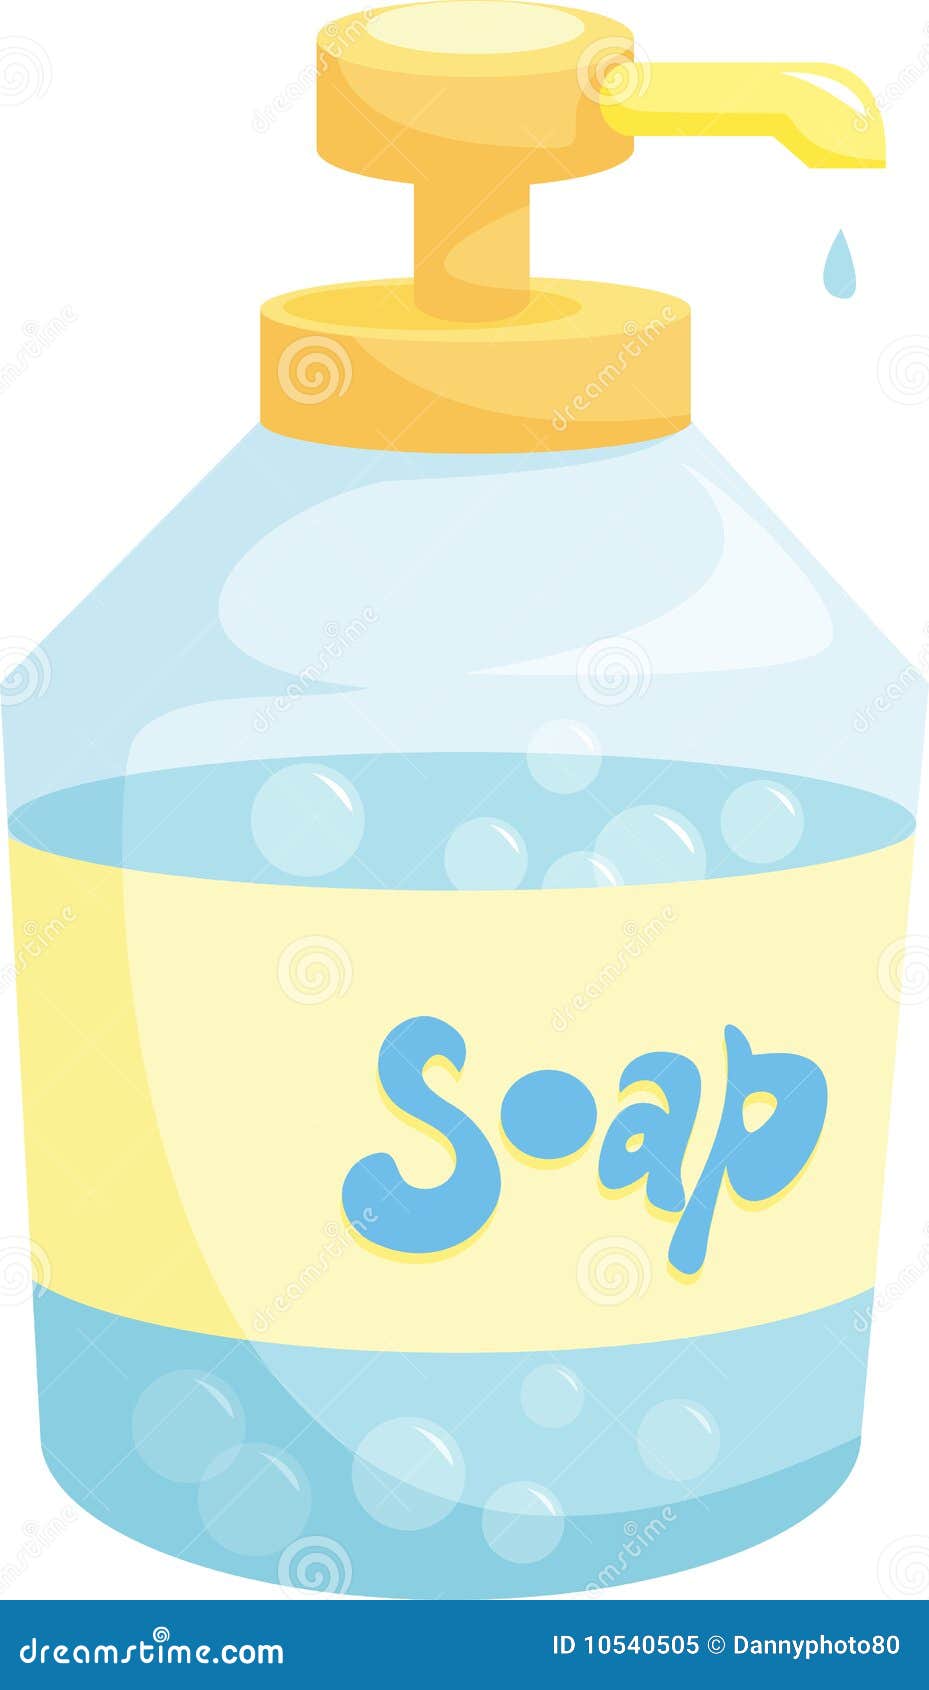 Soap bottle stock vector. Illustration of space, object - 10540505